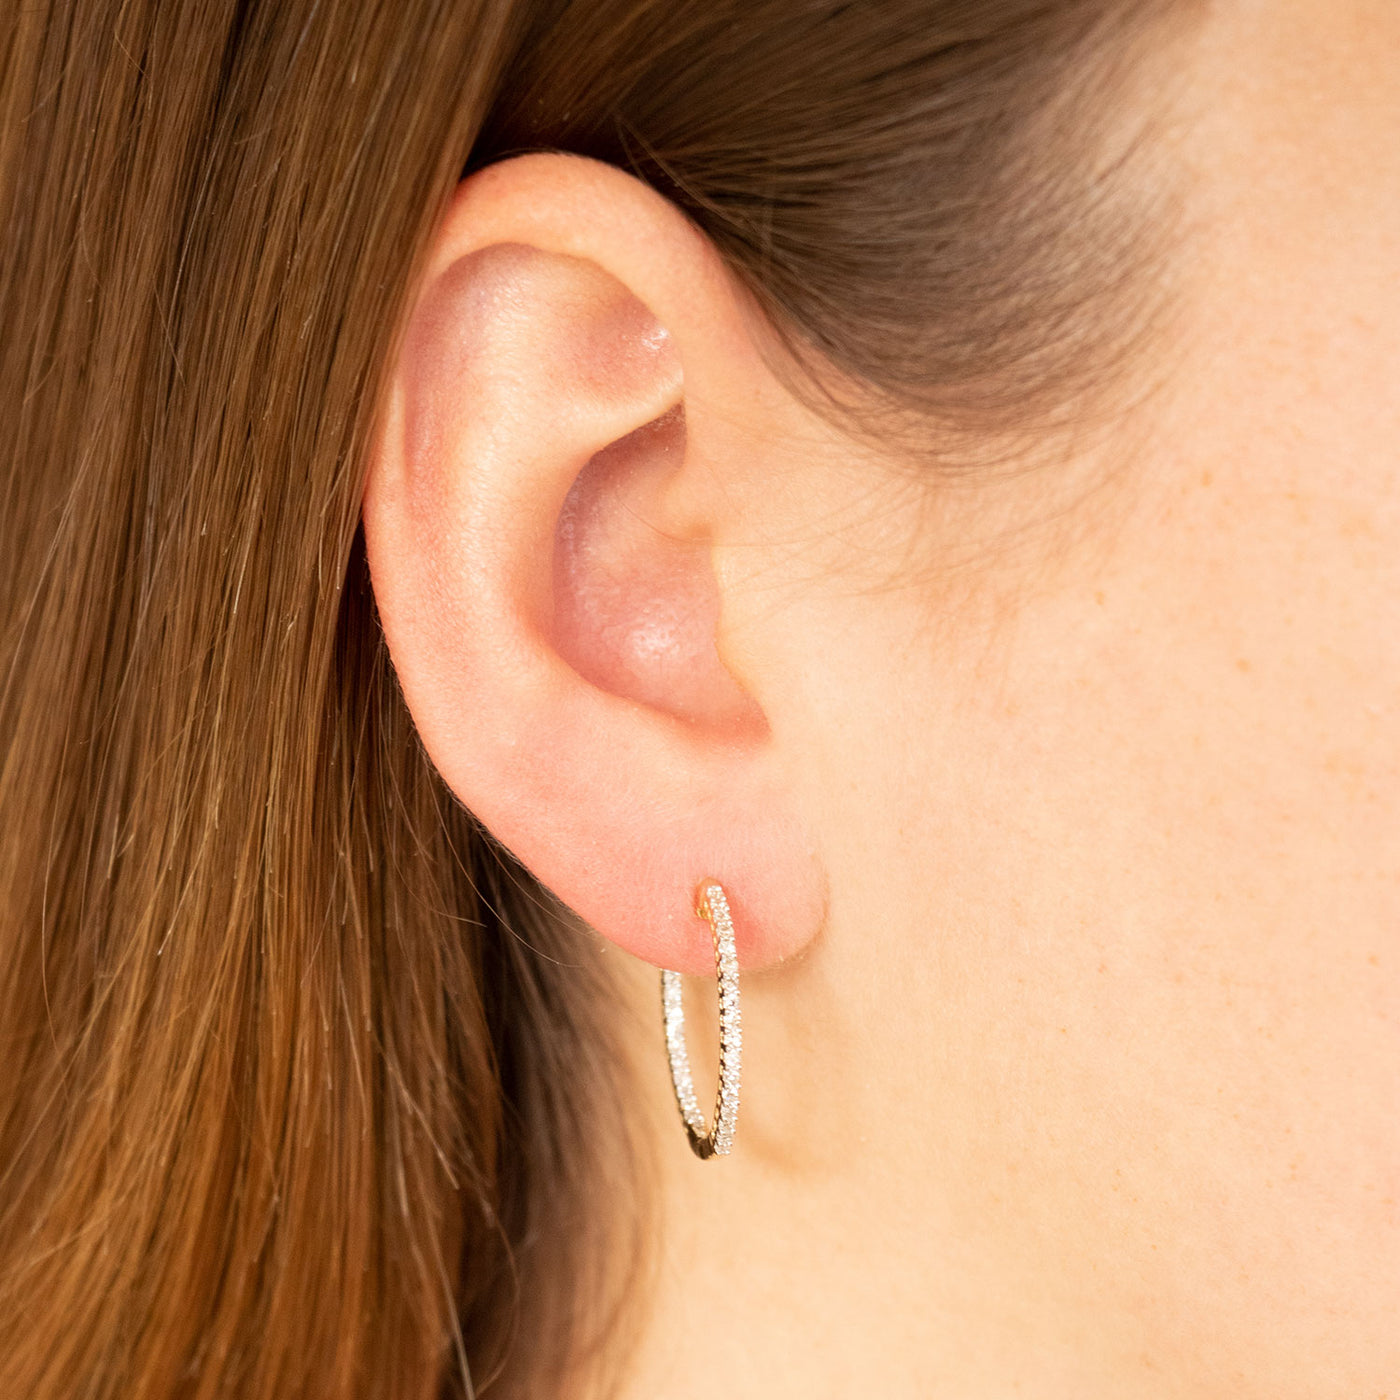 9ct Yellow Gold Diamond Huggie Earrings - 0.25 carats